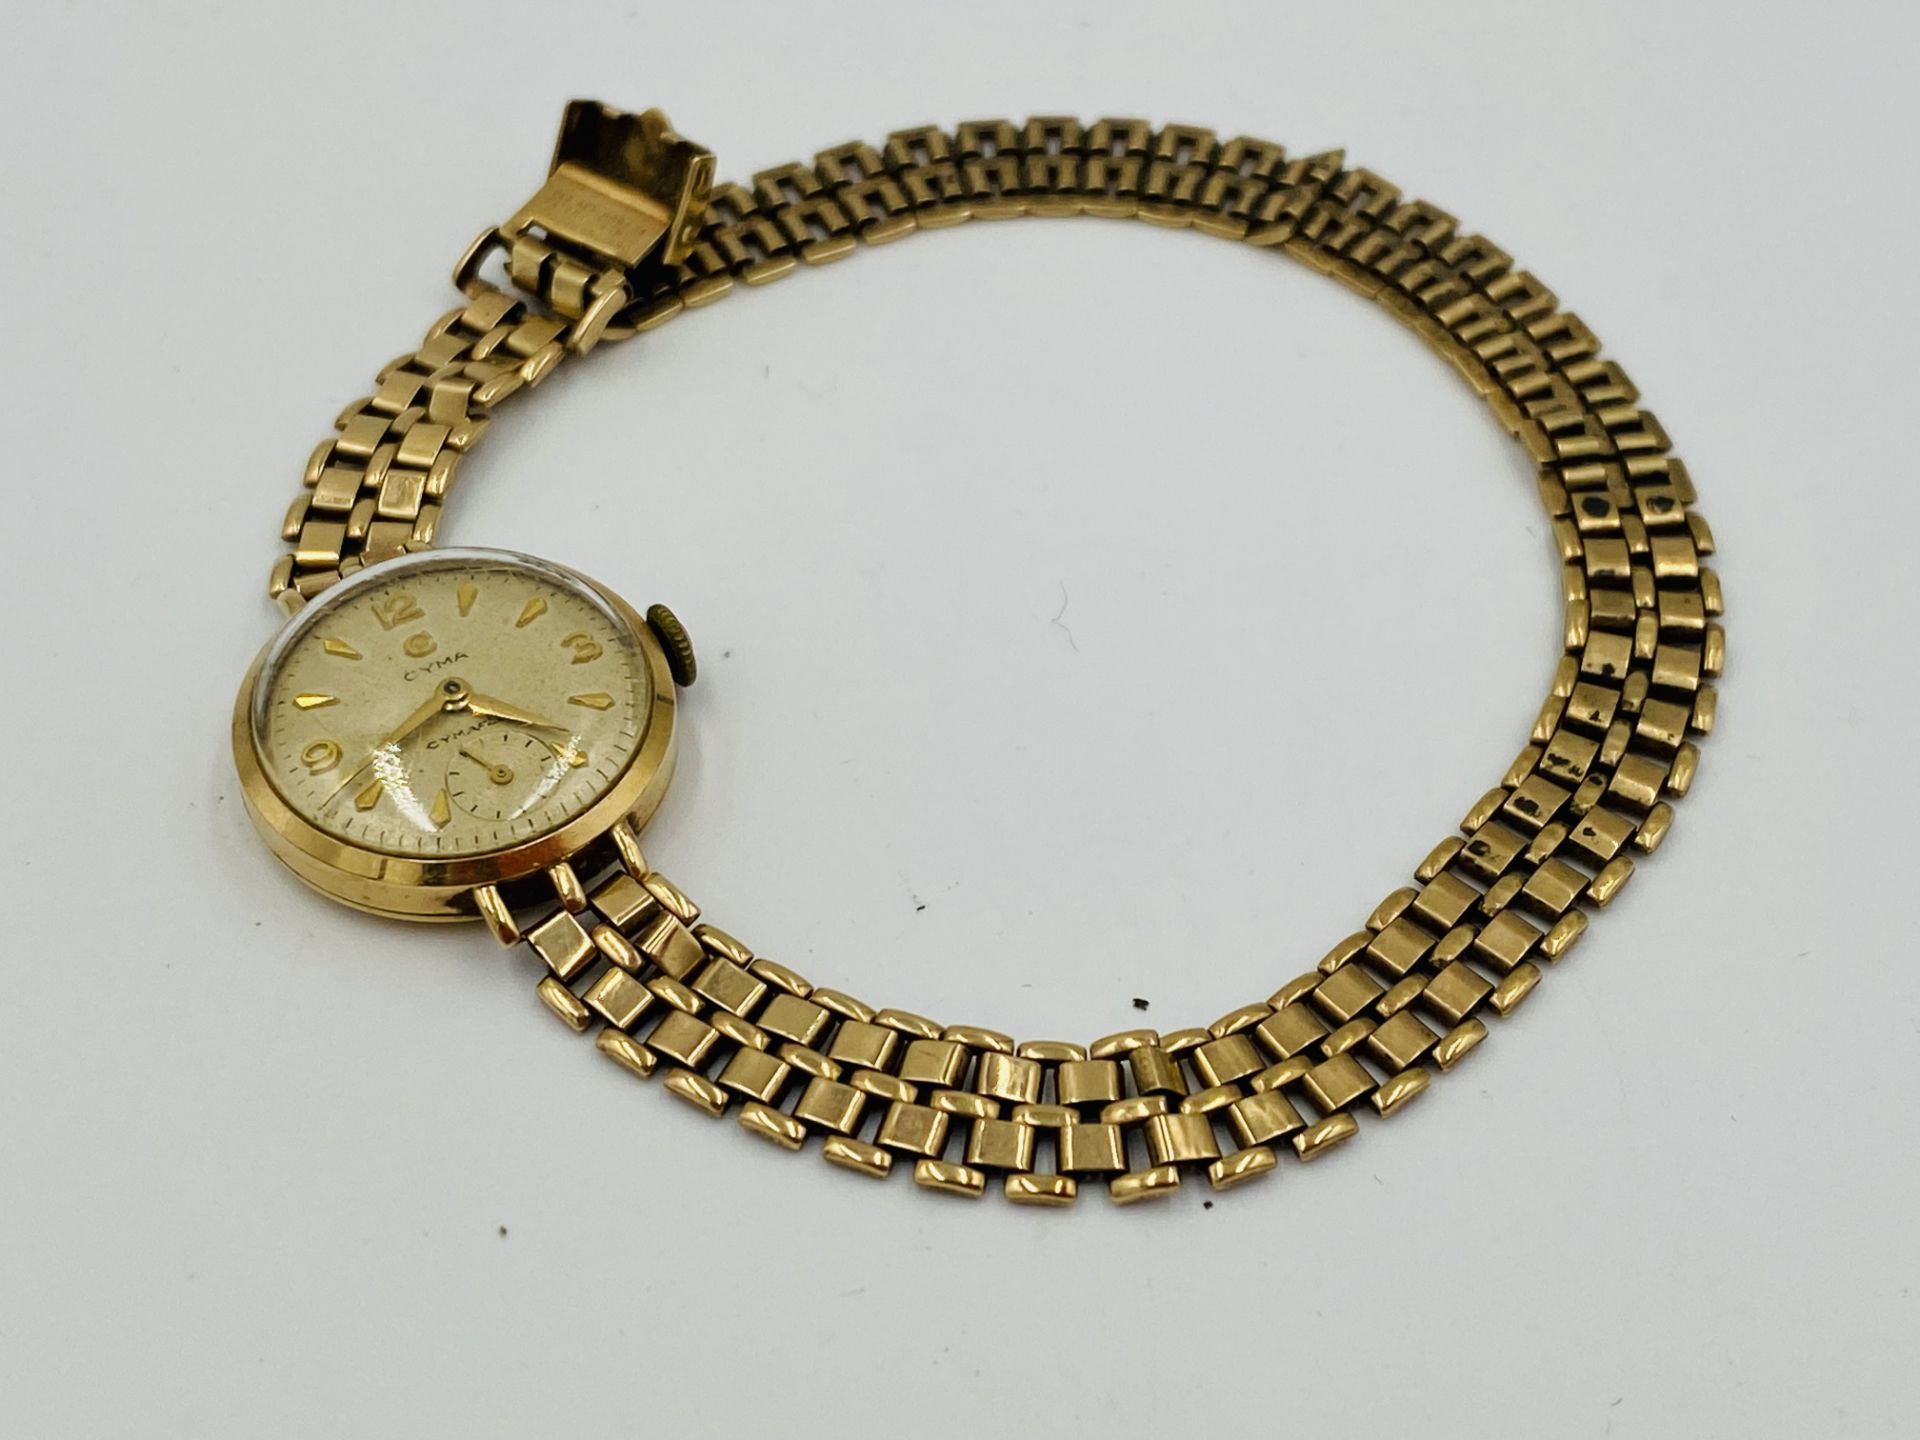 Cyma ladies wristwatch on 9ct gold strap,